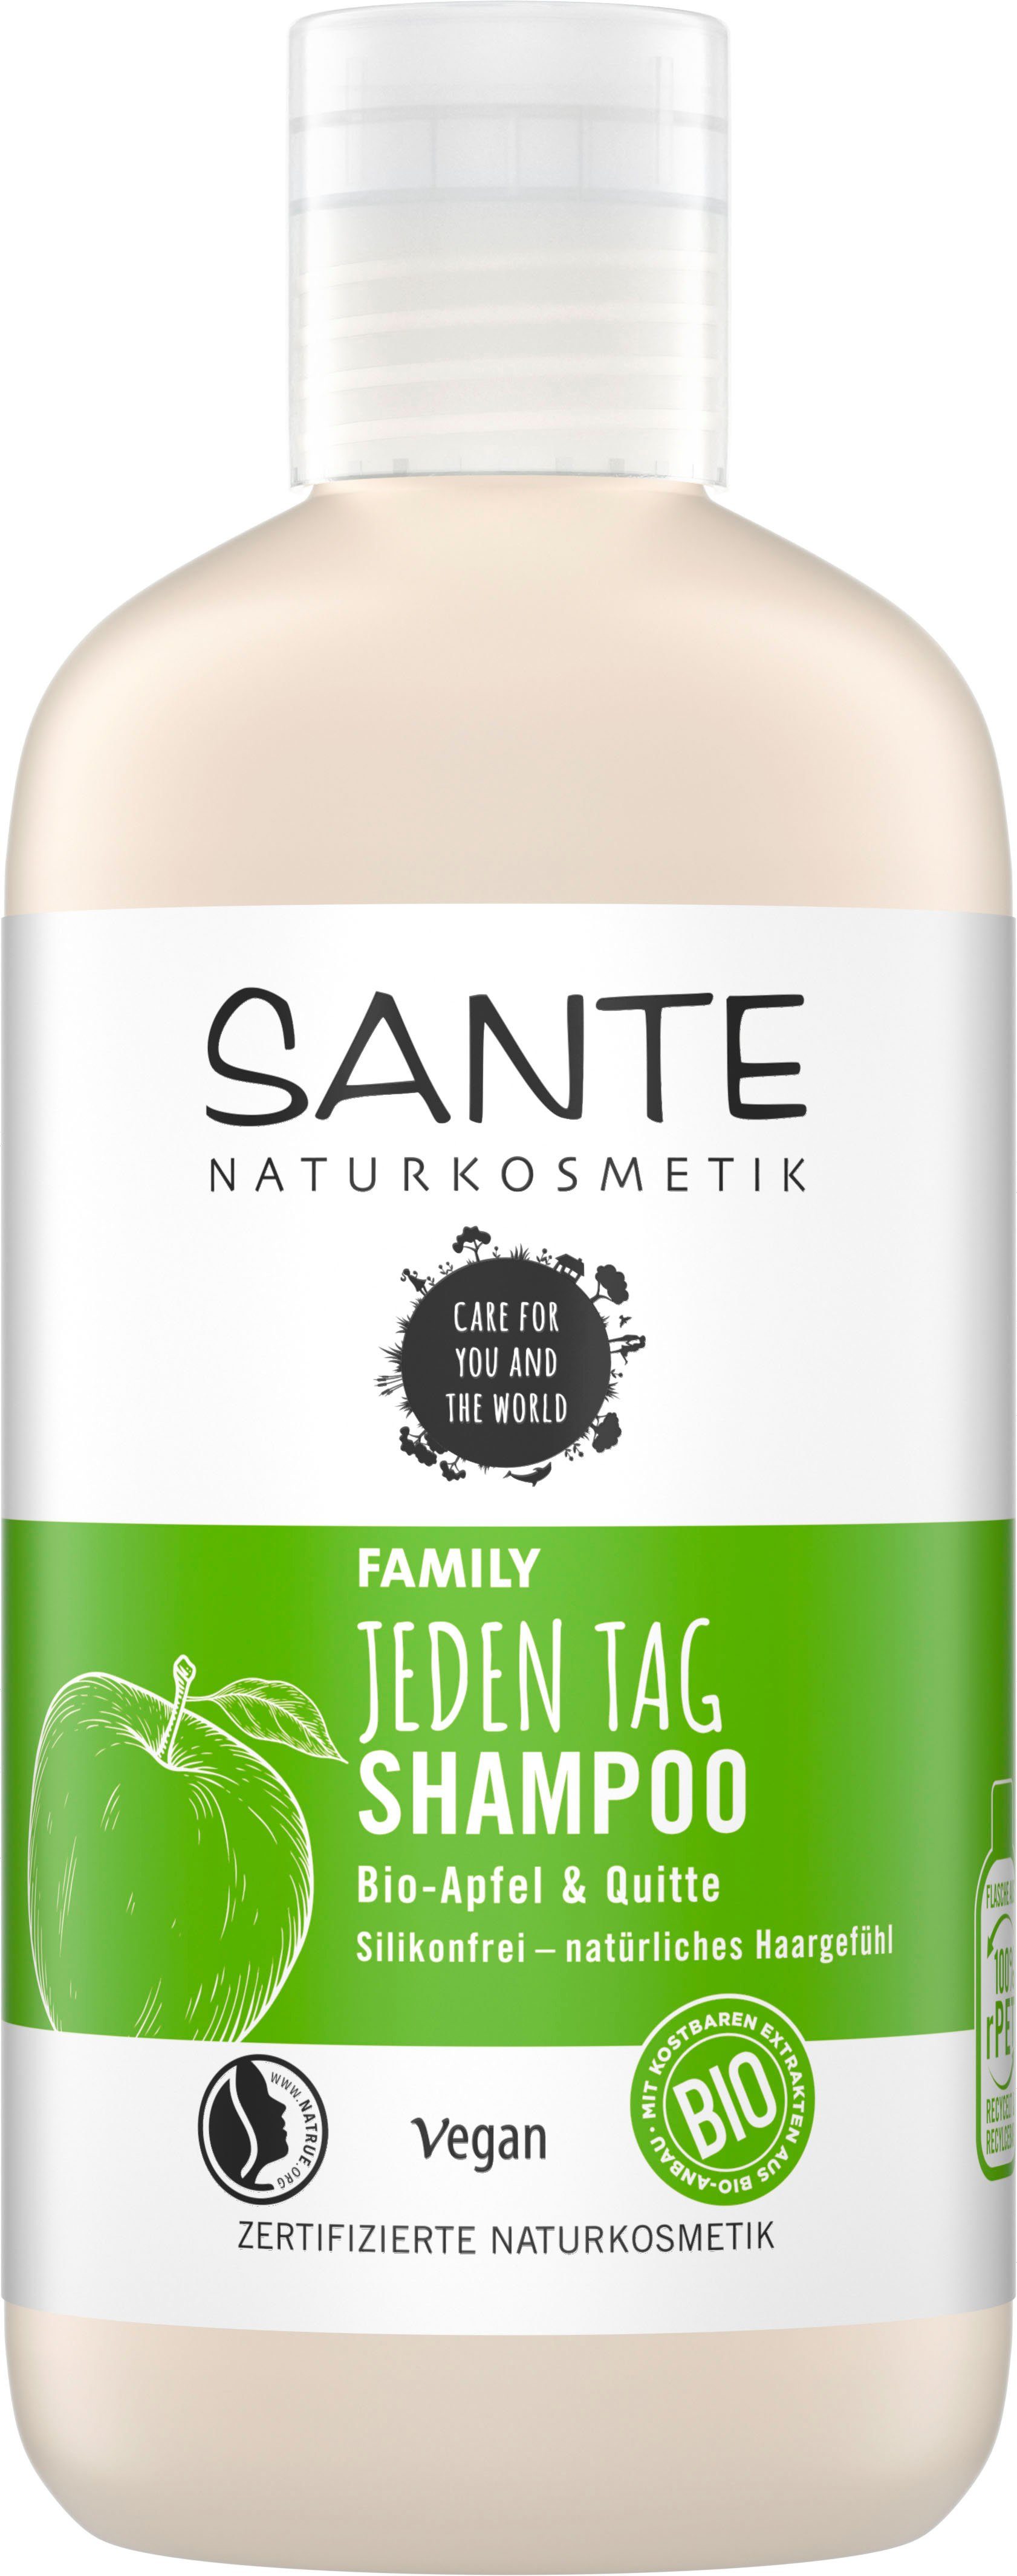 SANTE Haarshampoo FAMILY Jeden Tag Shampoo, Naturprodukt